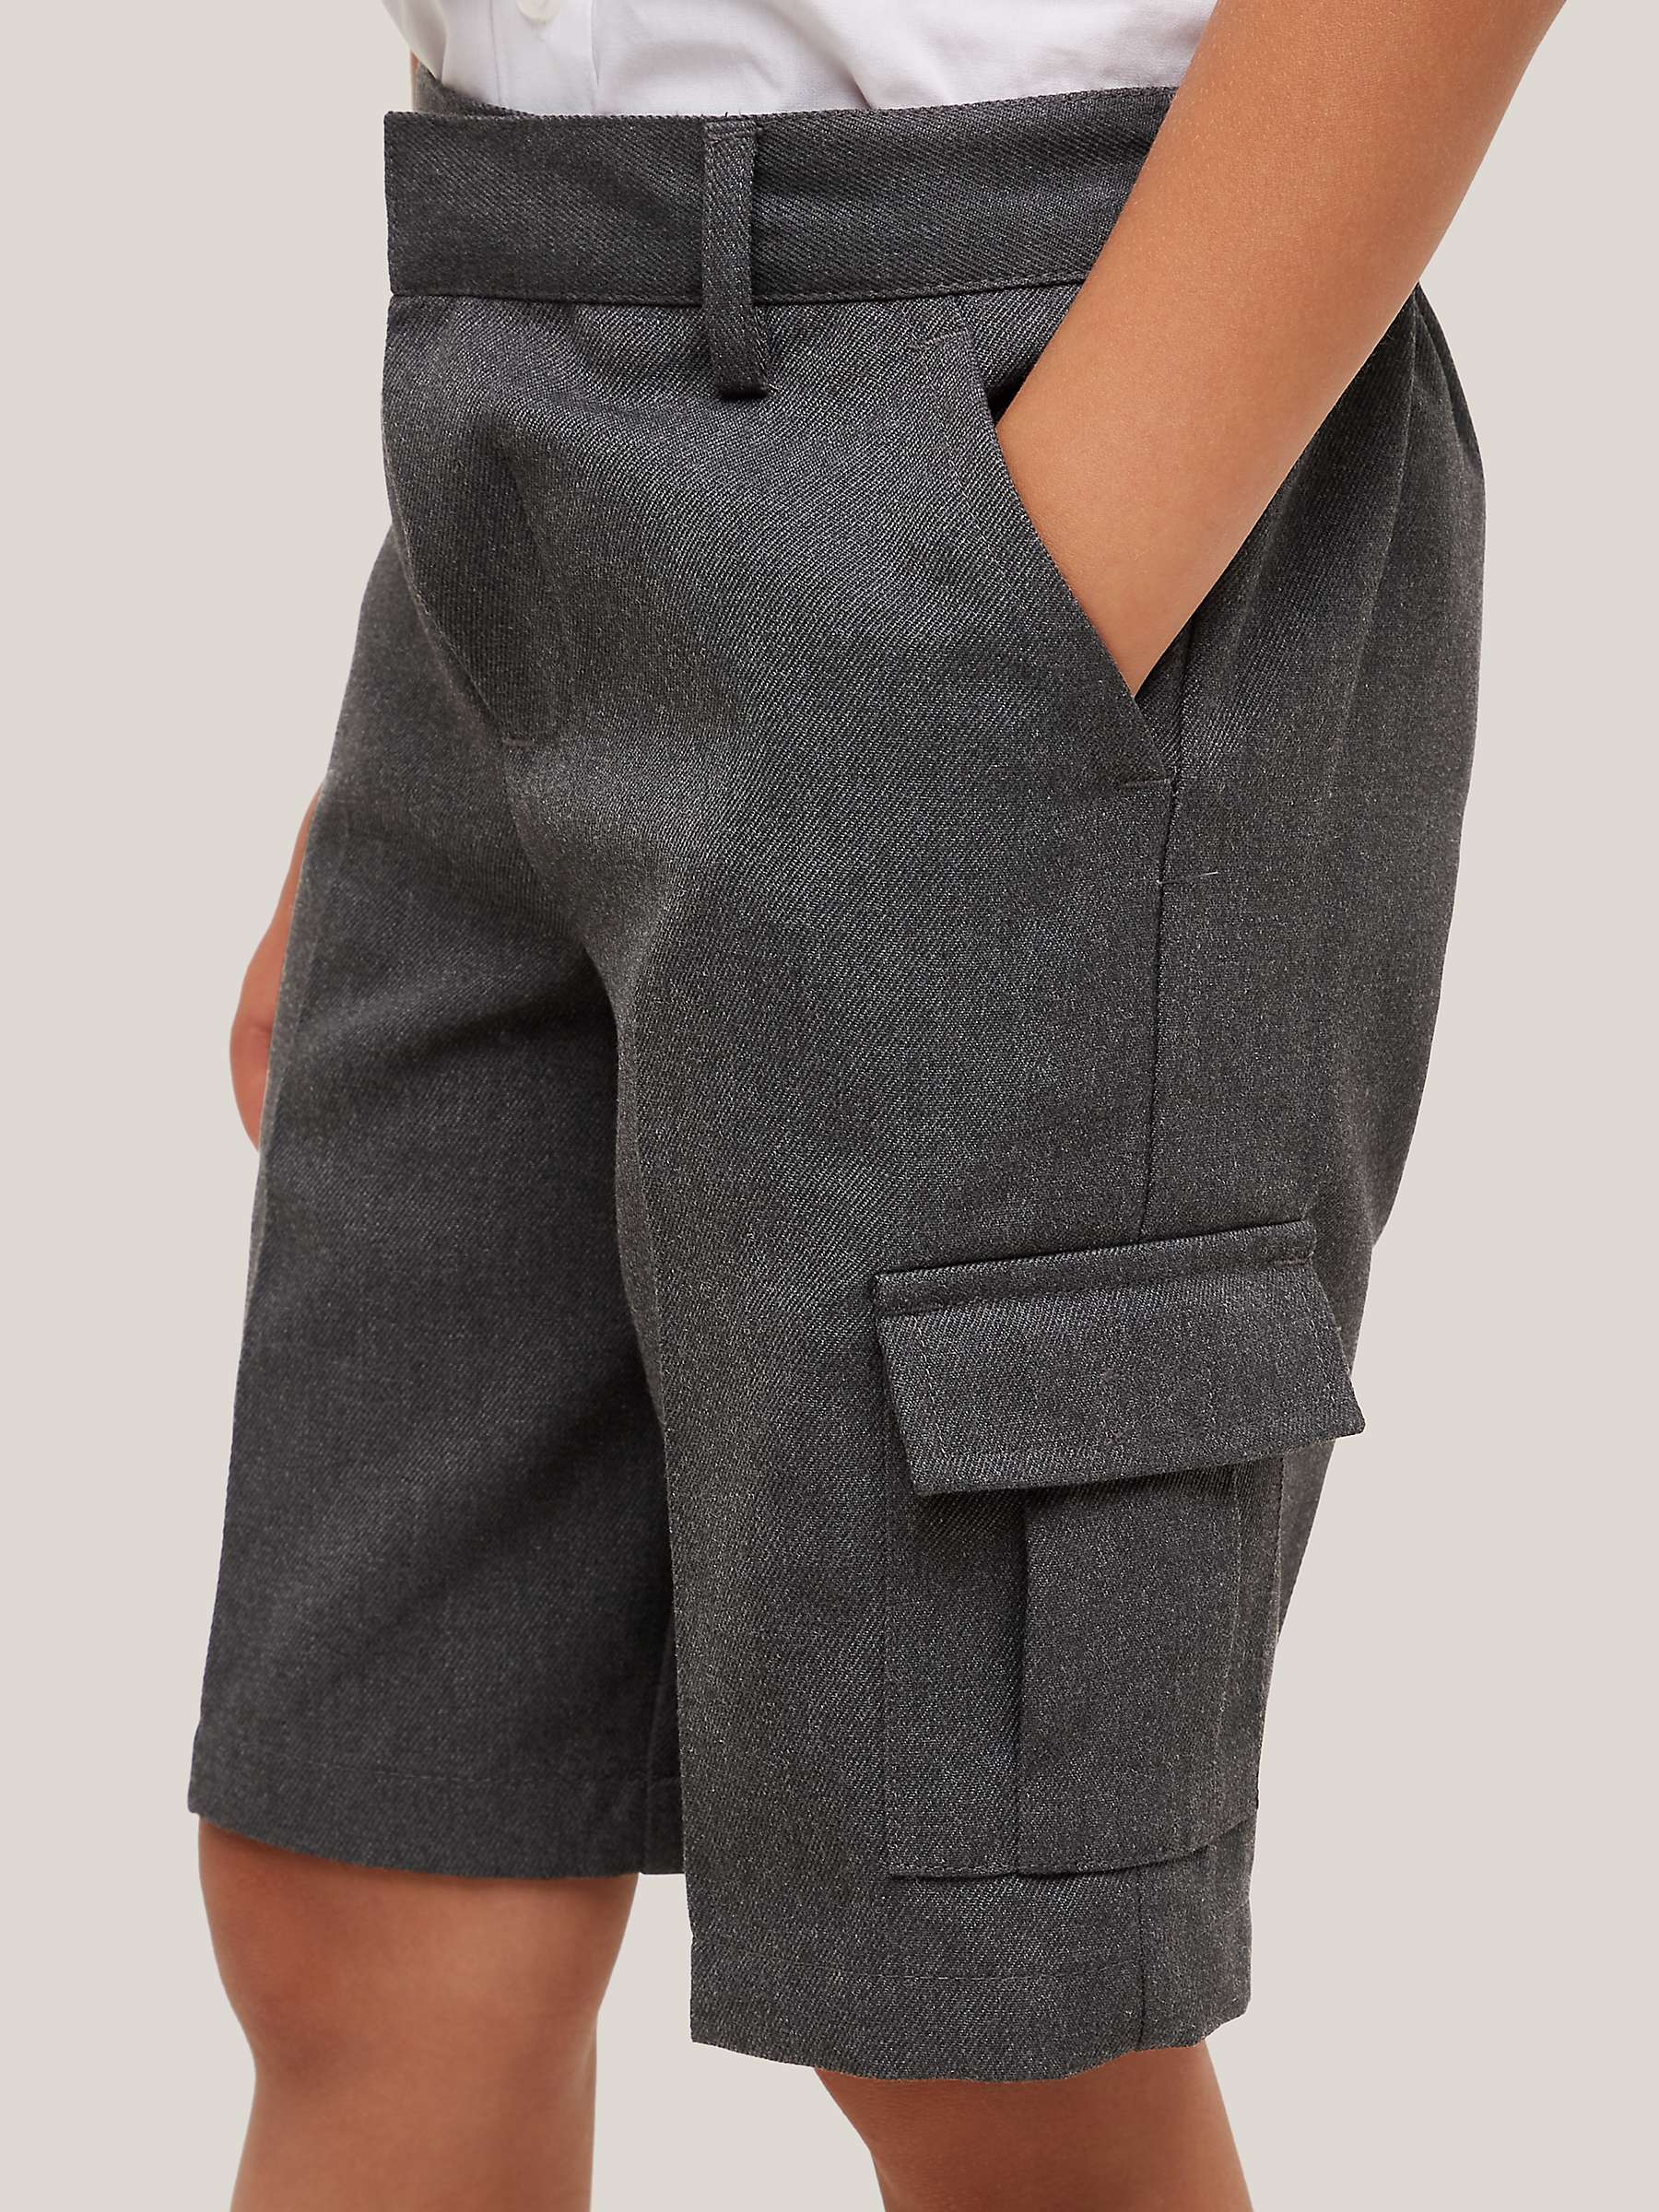 Buy John Lewis Boys' School Adjustable Waist Stain Resistant Cargo Shorts, Grey Online at johnlewis.com